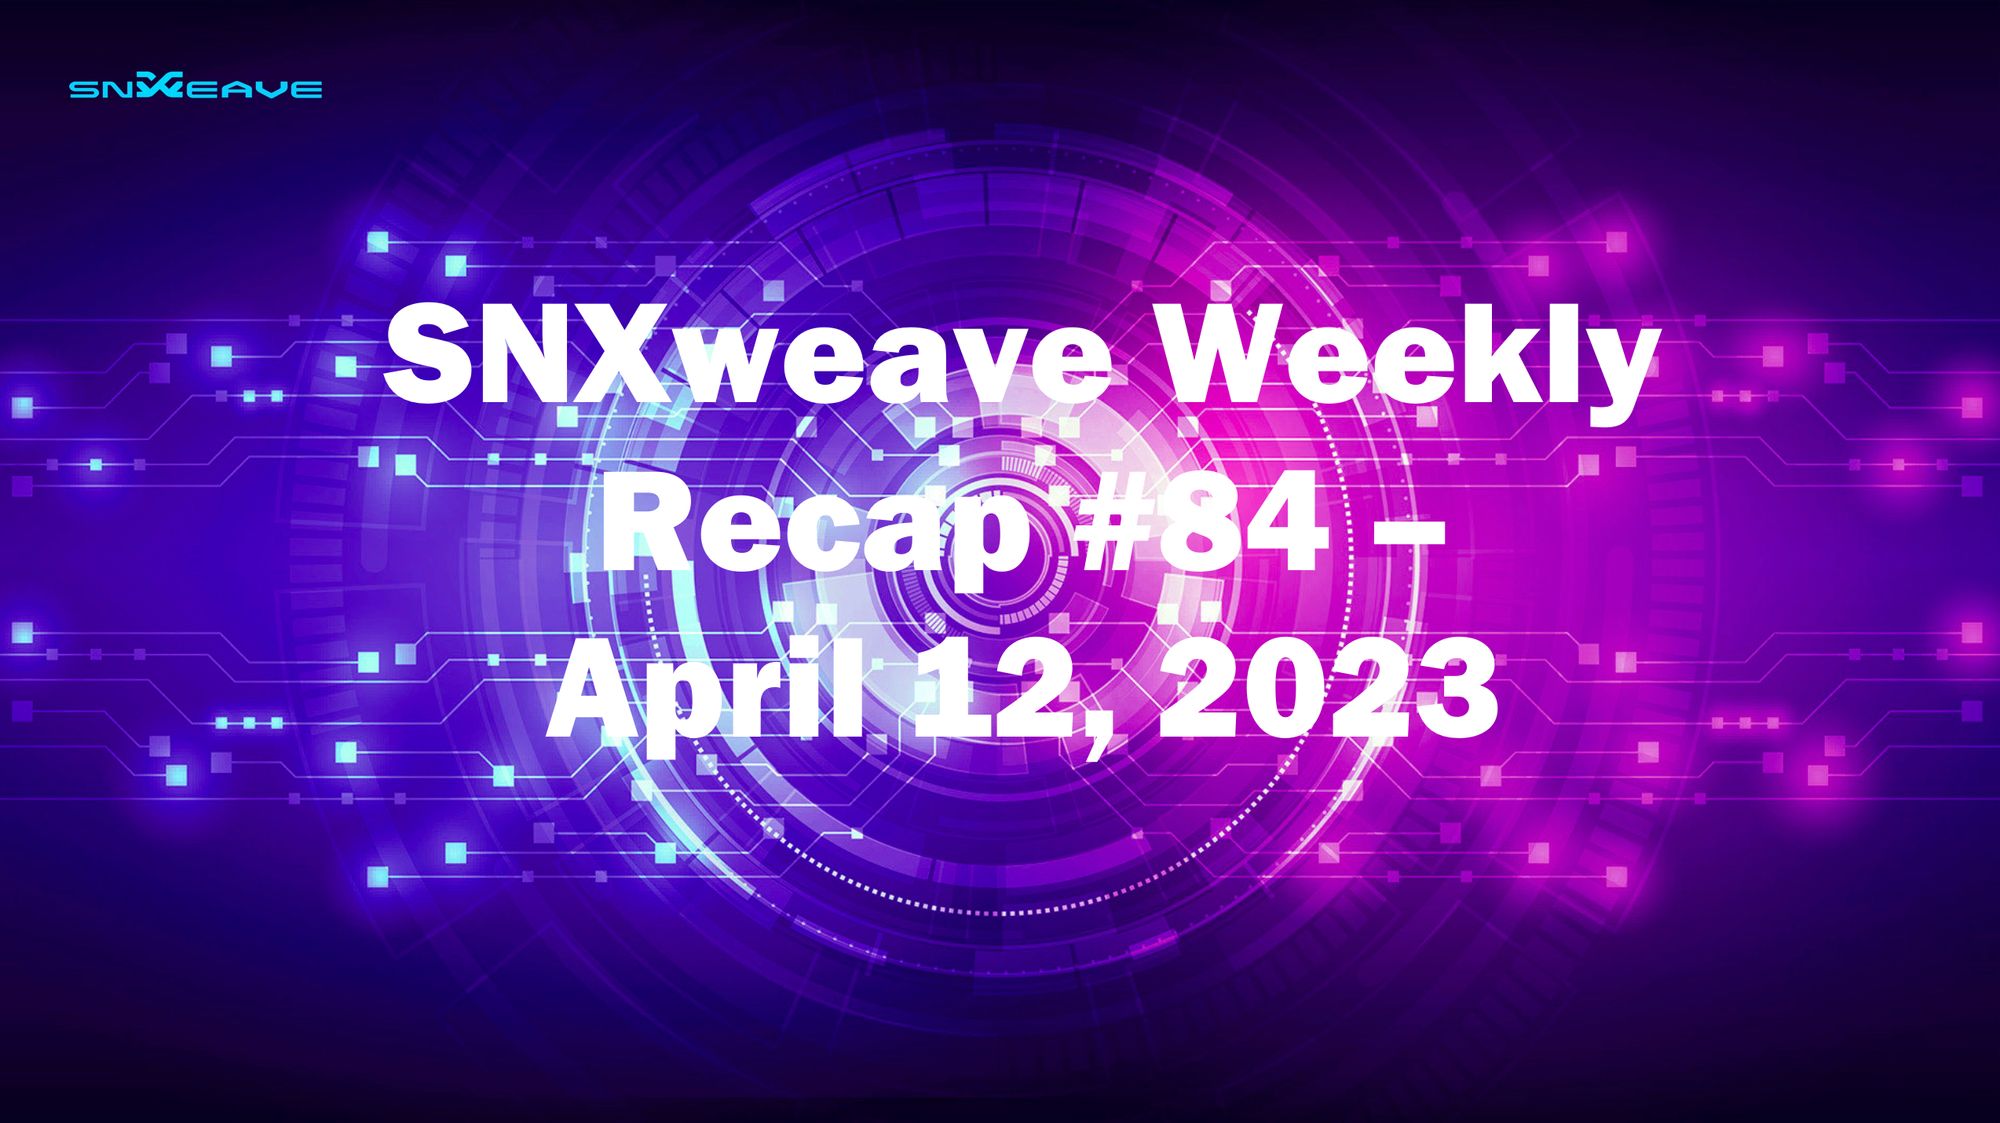 SNXweave Weekly Recap 84